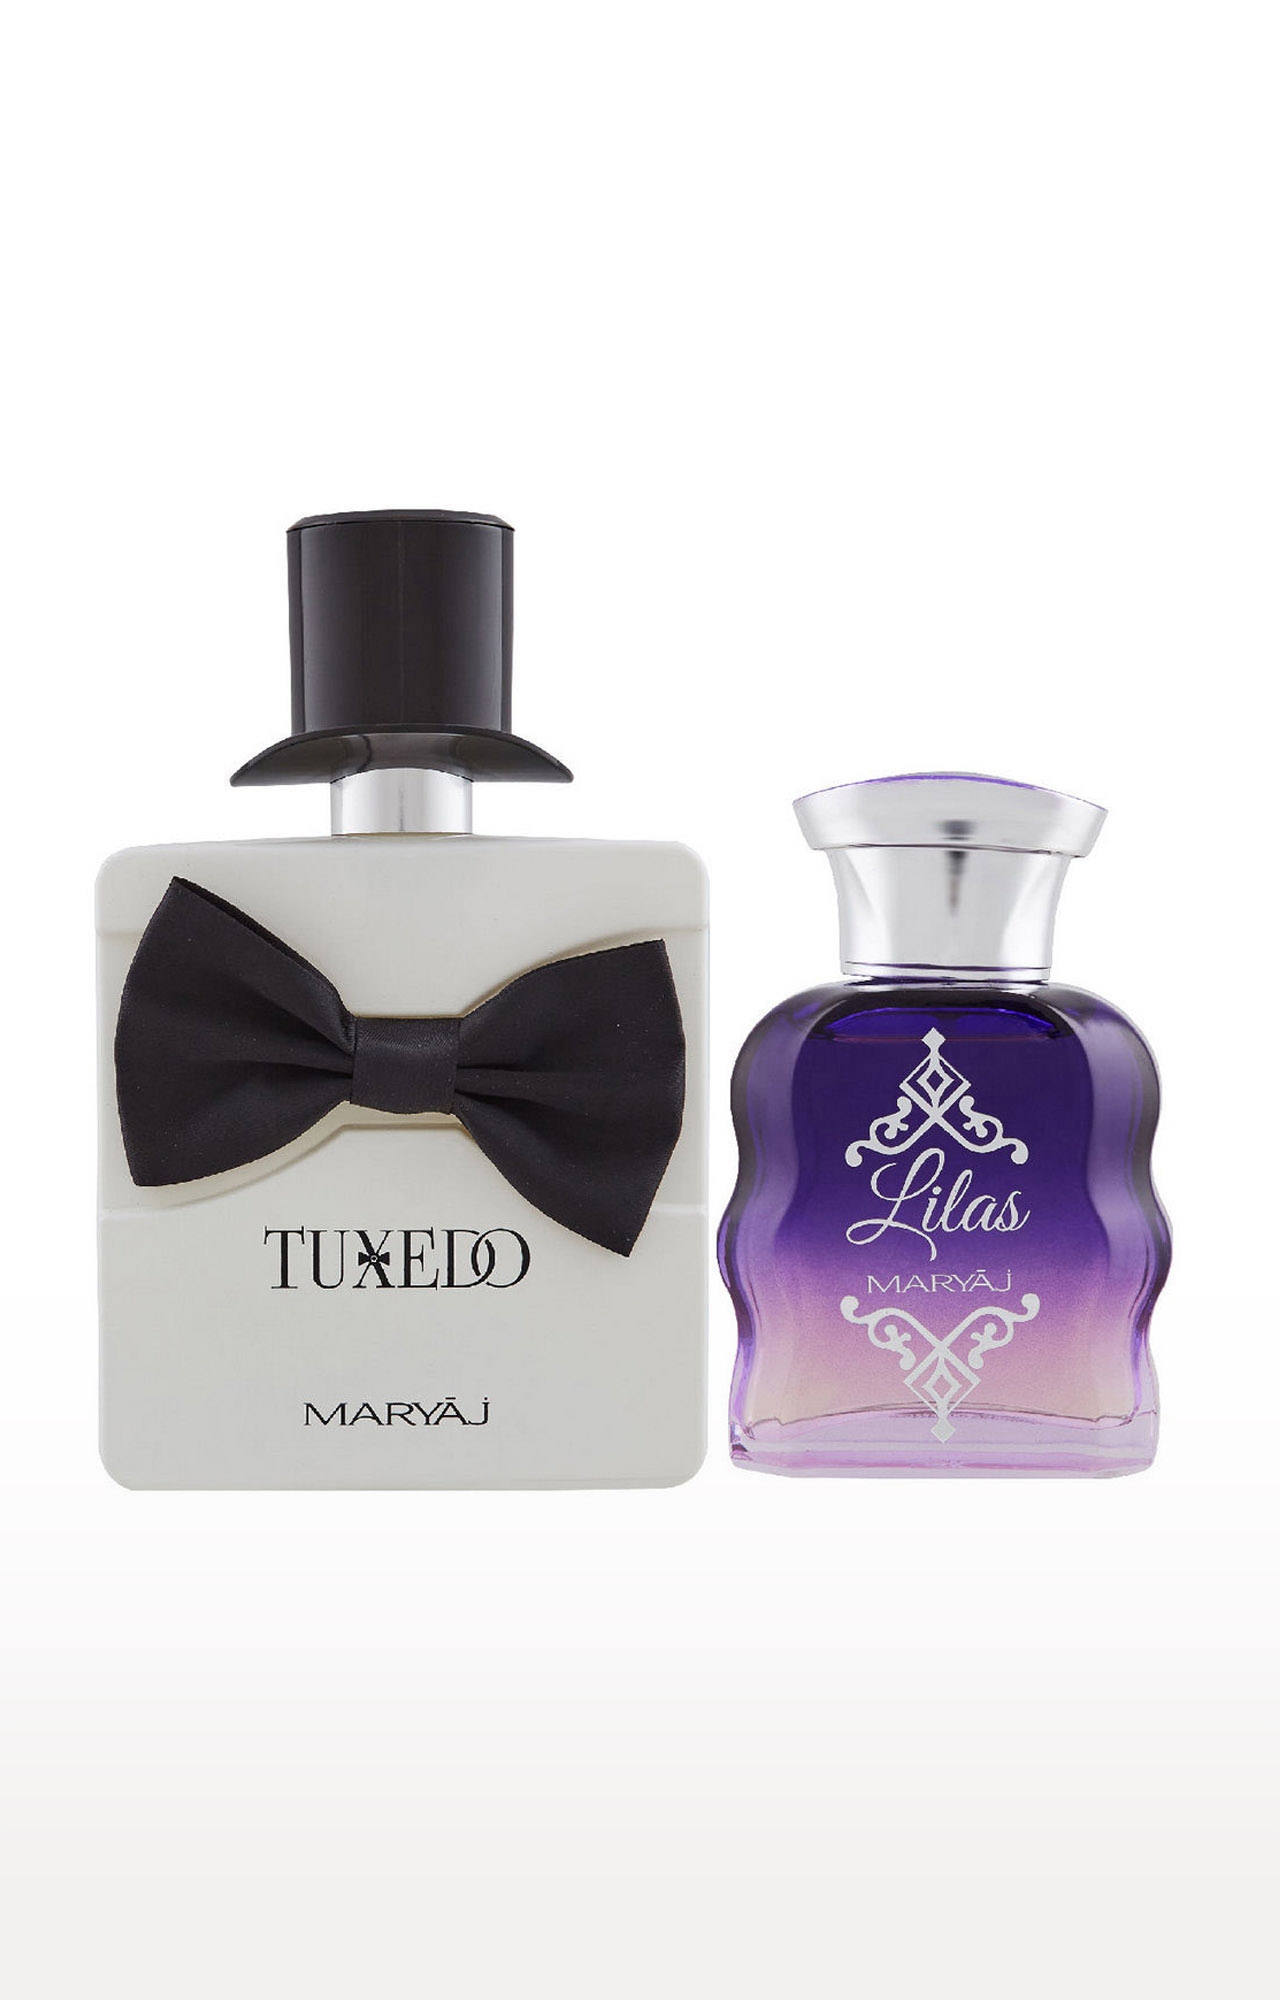 Maryaj | Maryaj Tuxedo Eau De Parfum Perfume 100ml for Men and Maryaj Lilas Eau De Parfum Perfume 100ml for Women